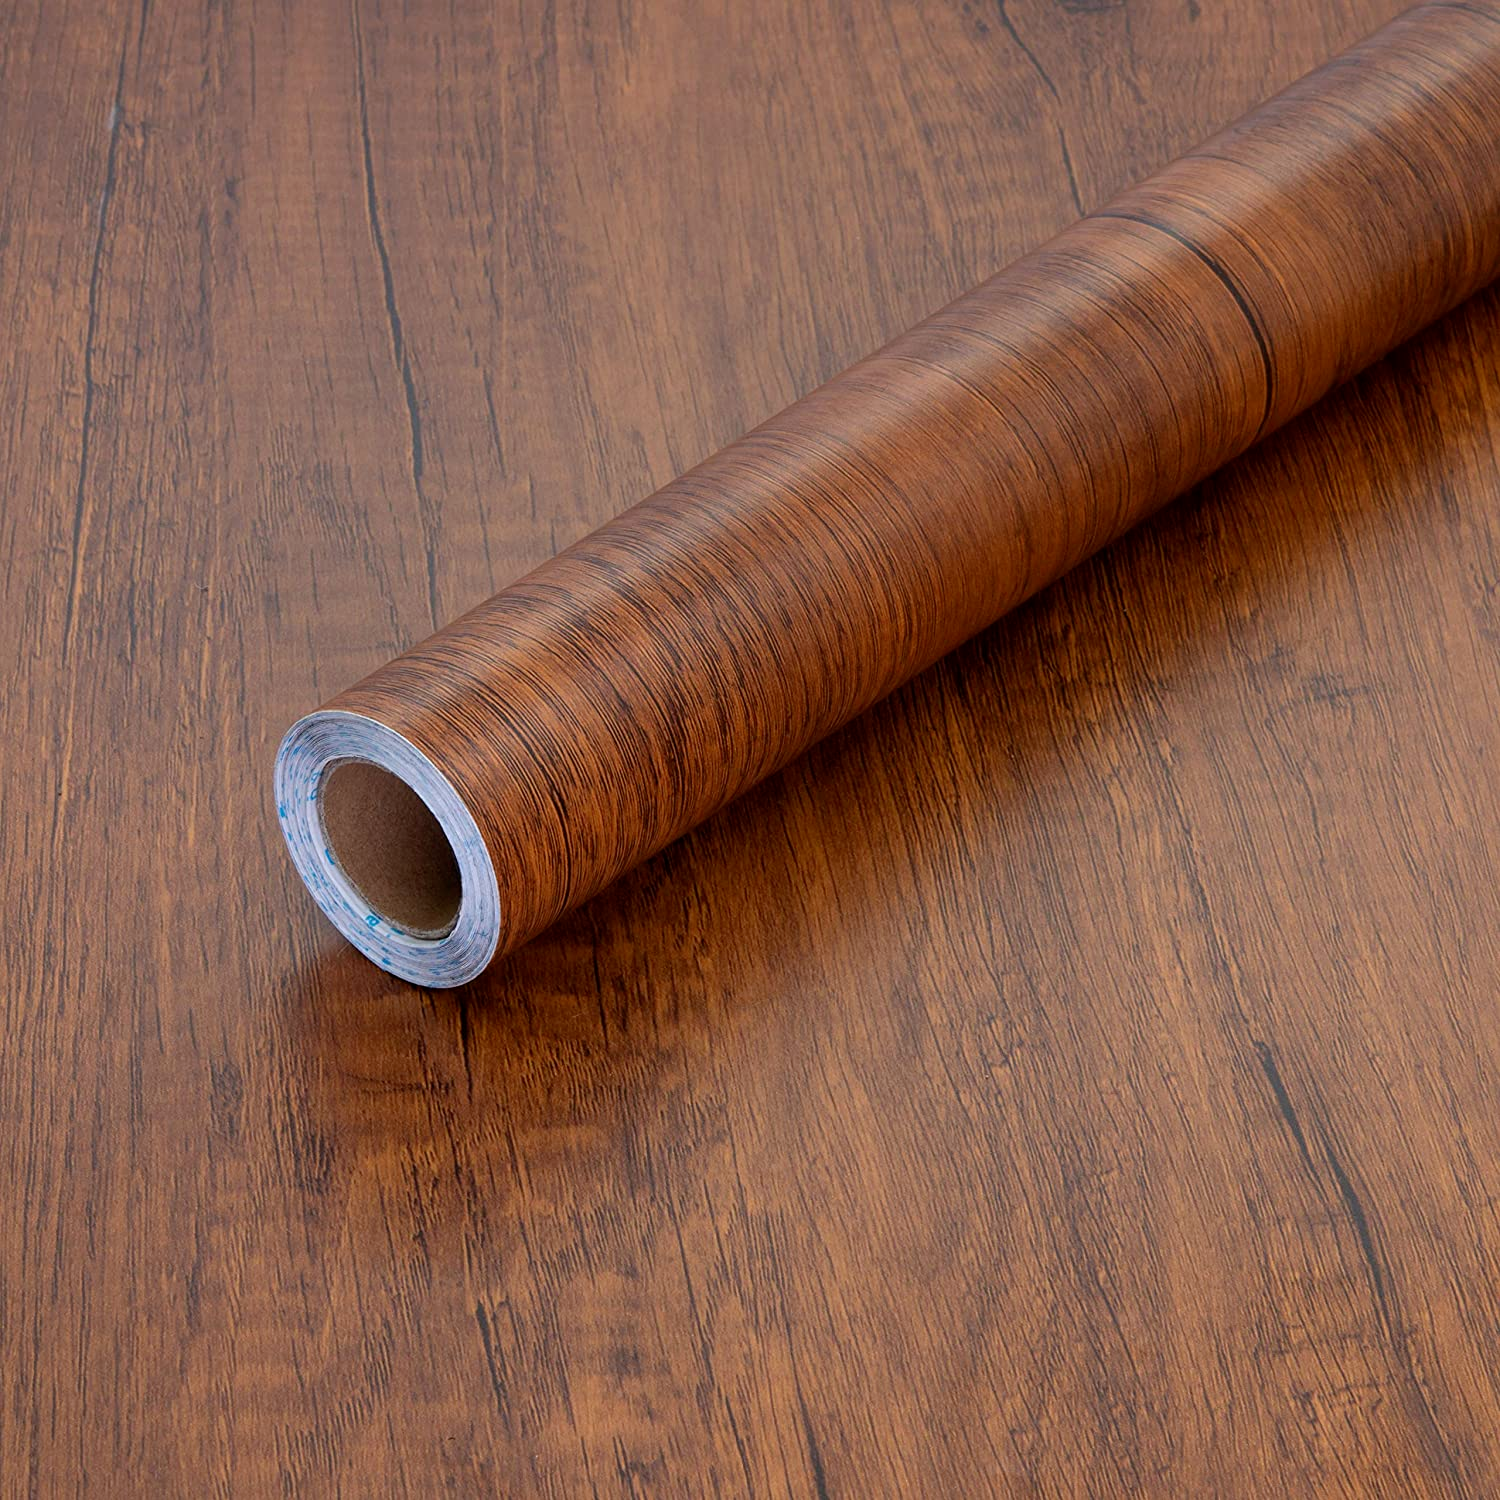 Self-Adhesive Peel and Stick Wood Grain Wallpaper for Home, 17.71